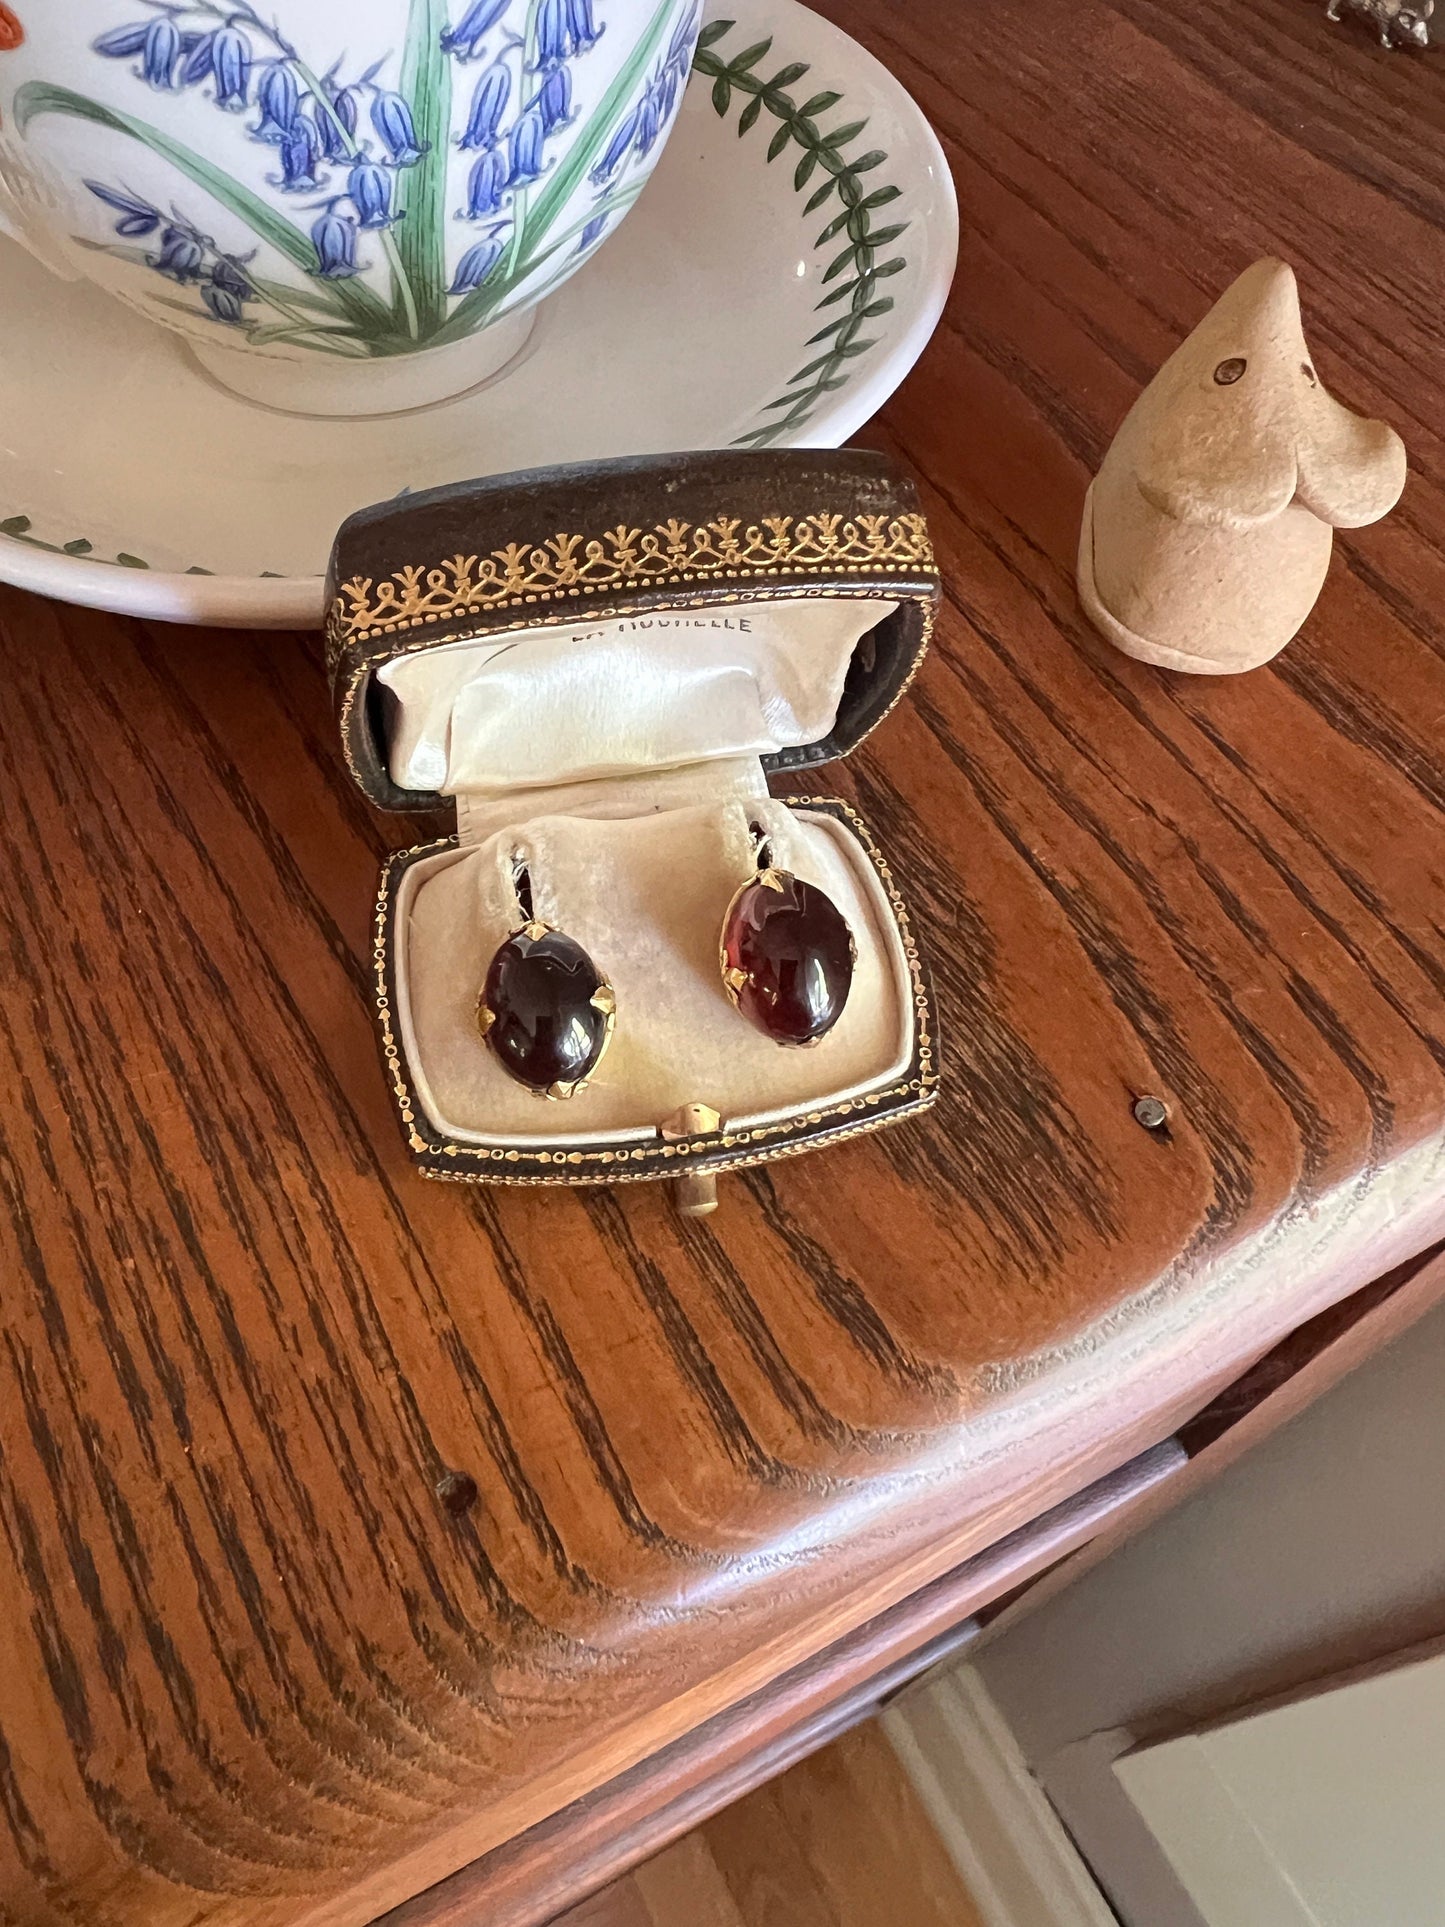 Fleur De Lis Prongs Large Juicy Cabochon Garnet Stud Earrings Vintage to Antique 14k Gold Glowing Crimson Red Domed Chunky Statement Orbs